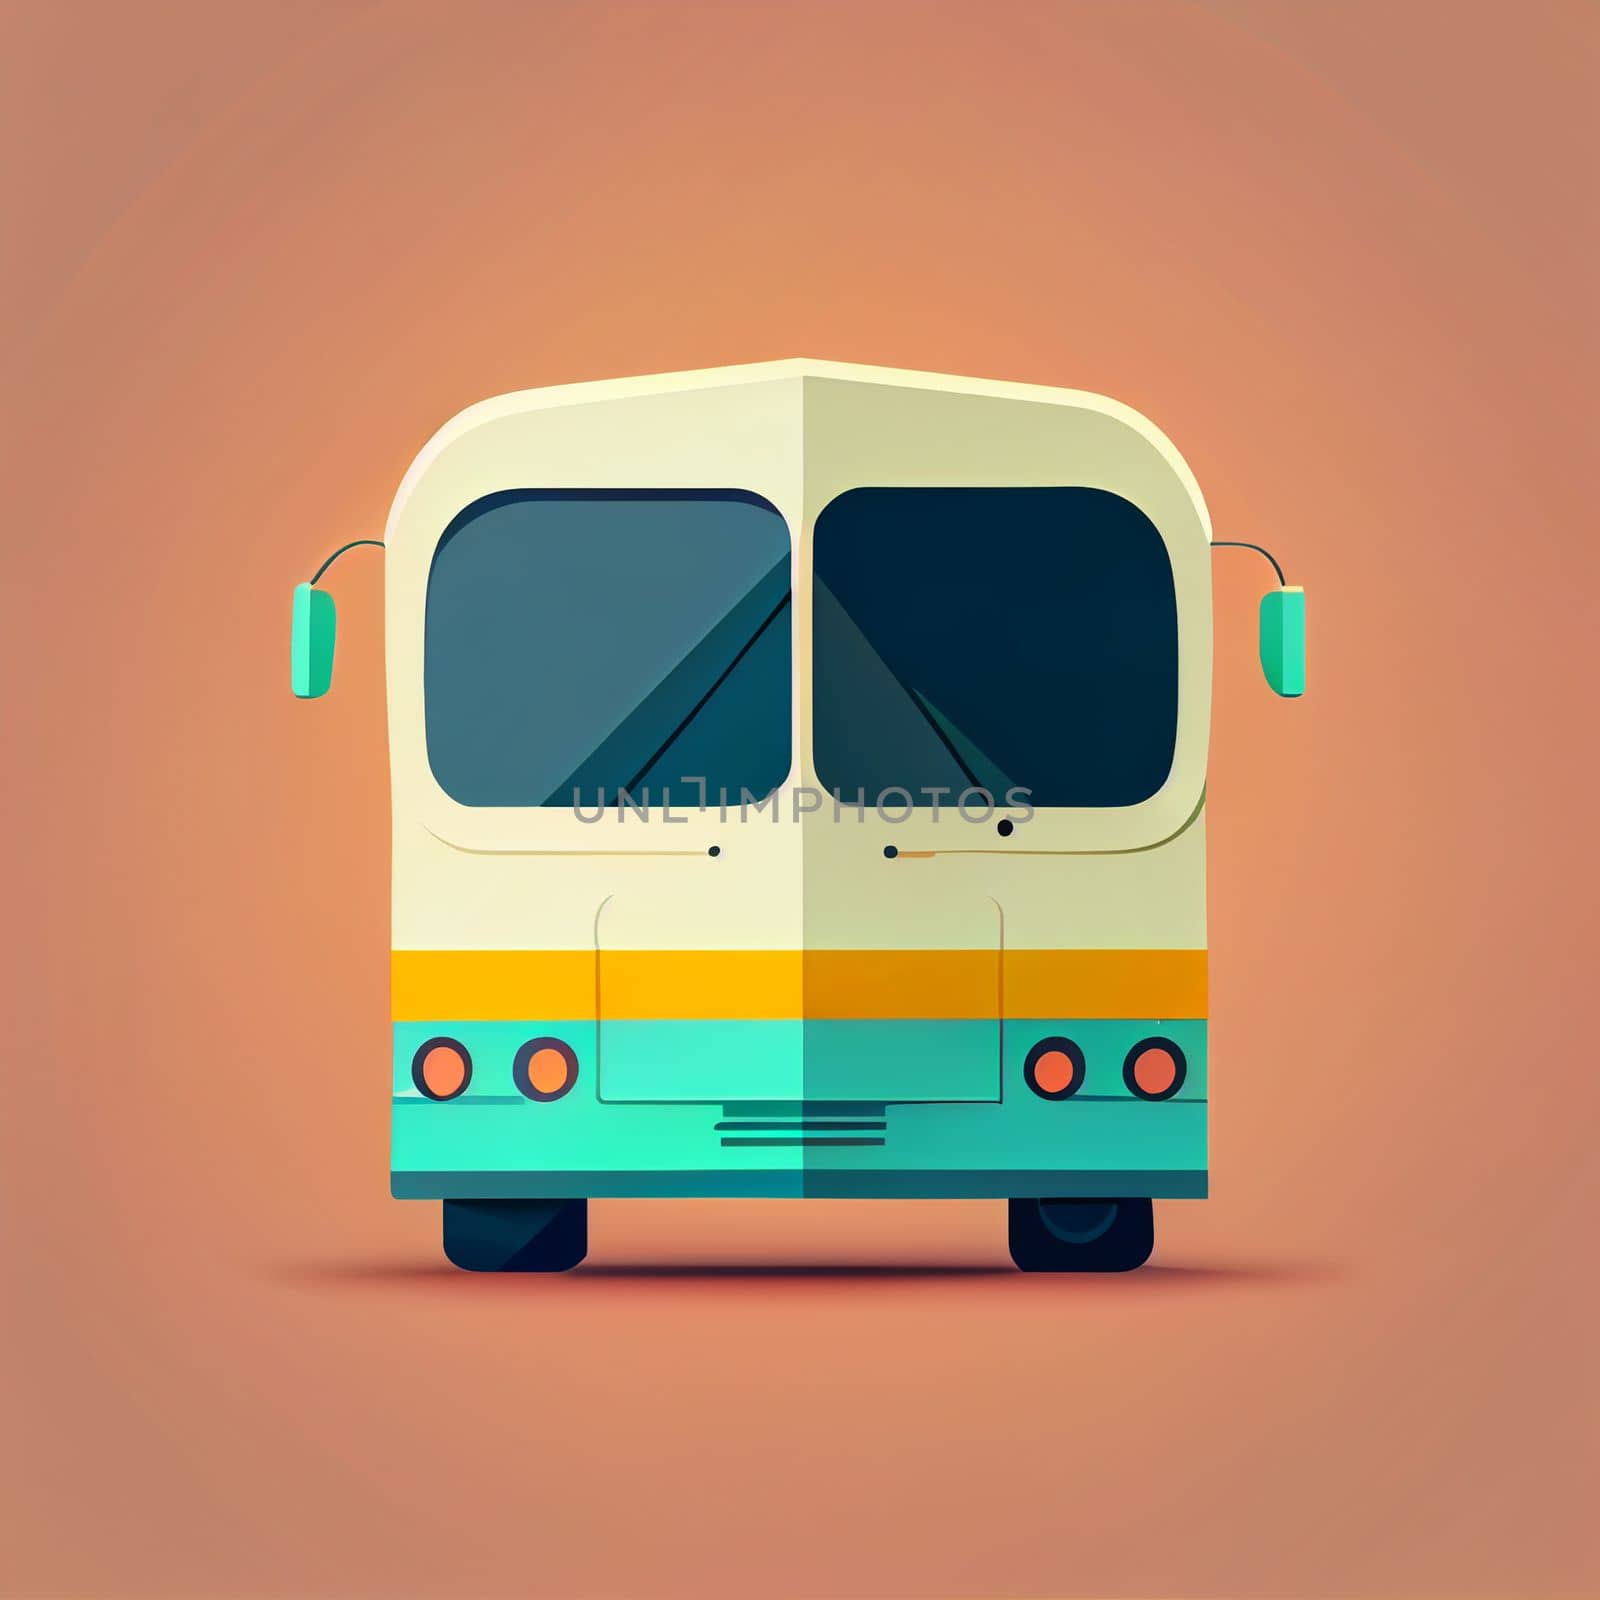 Modern flat design of Transport public transportable bus for transportation in city. by FokasuArt